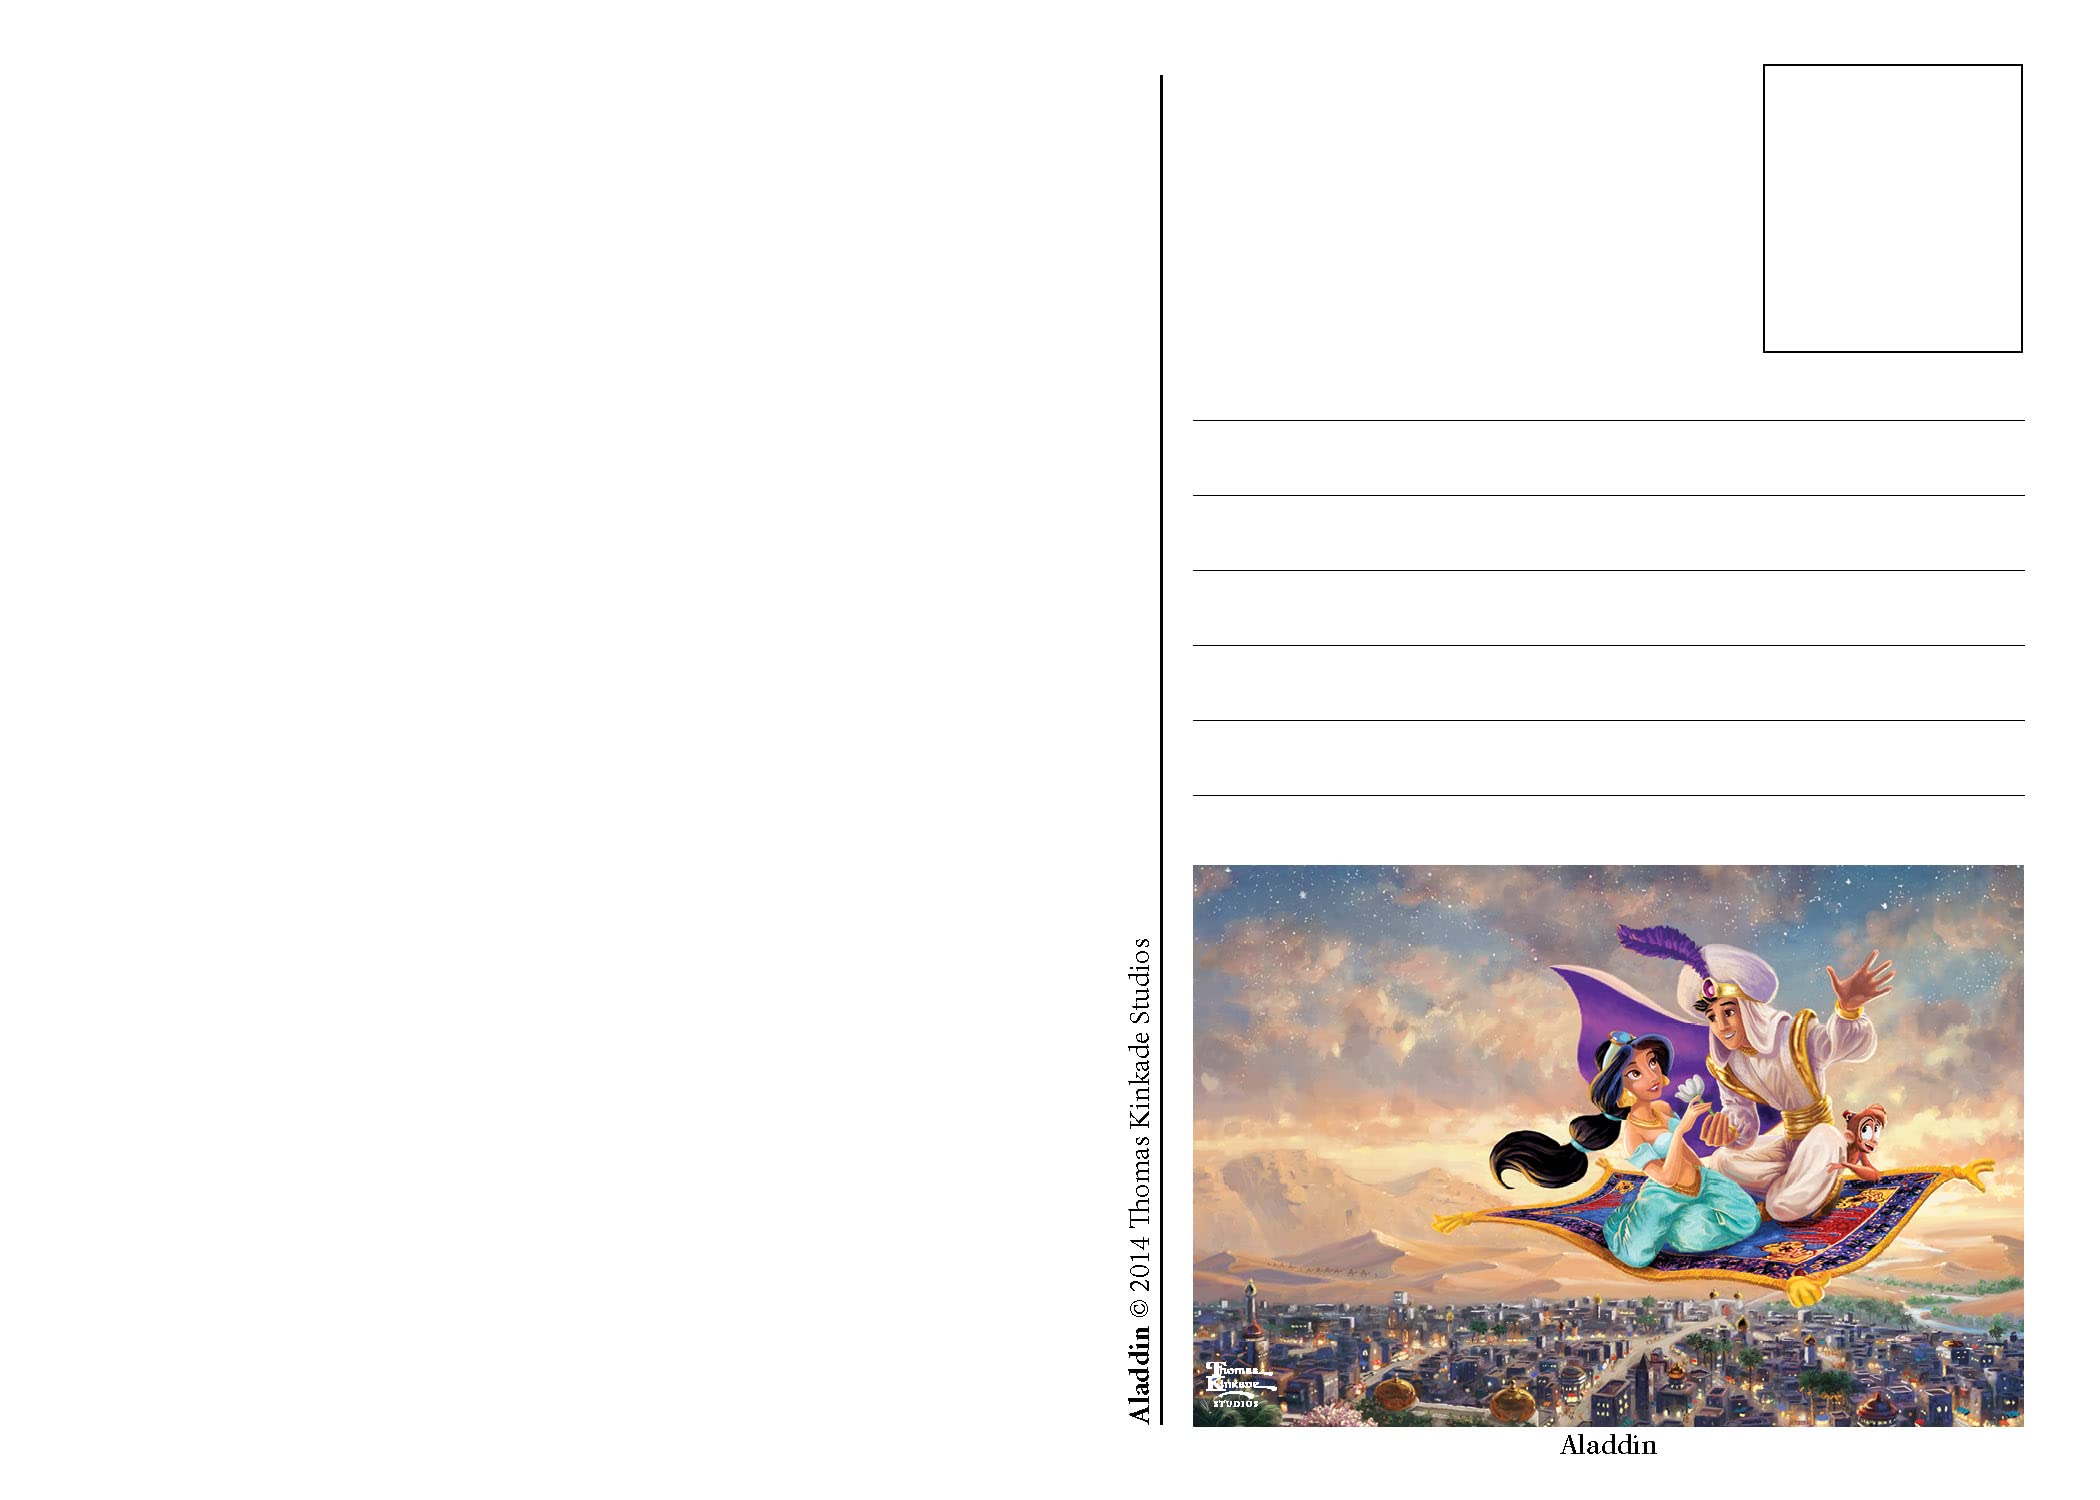 Disney Dreams Collection Thomas Kinkade Studios Disney Princess Color Your Own Postcards